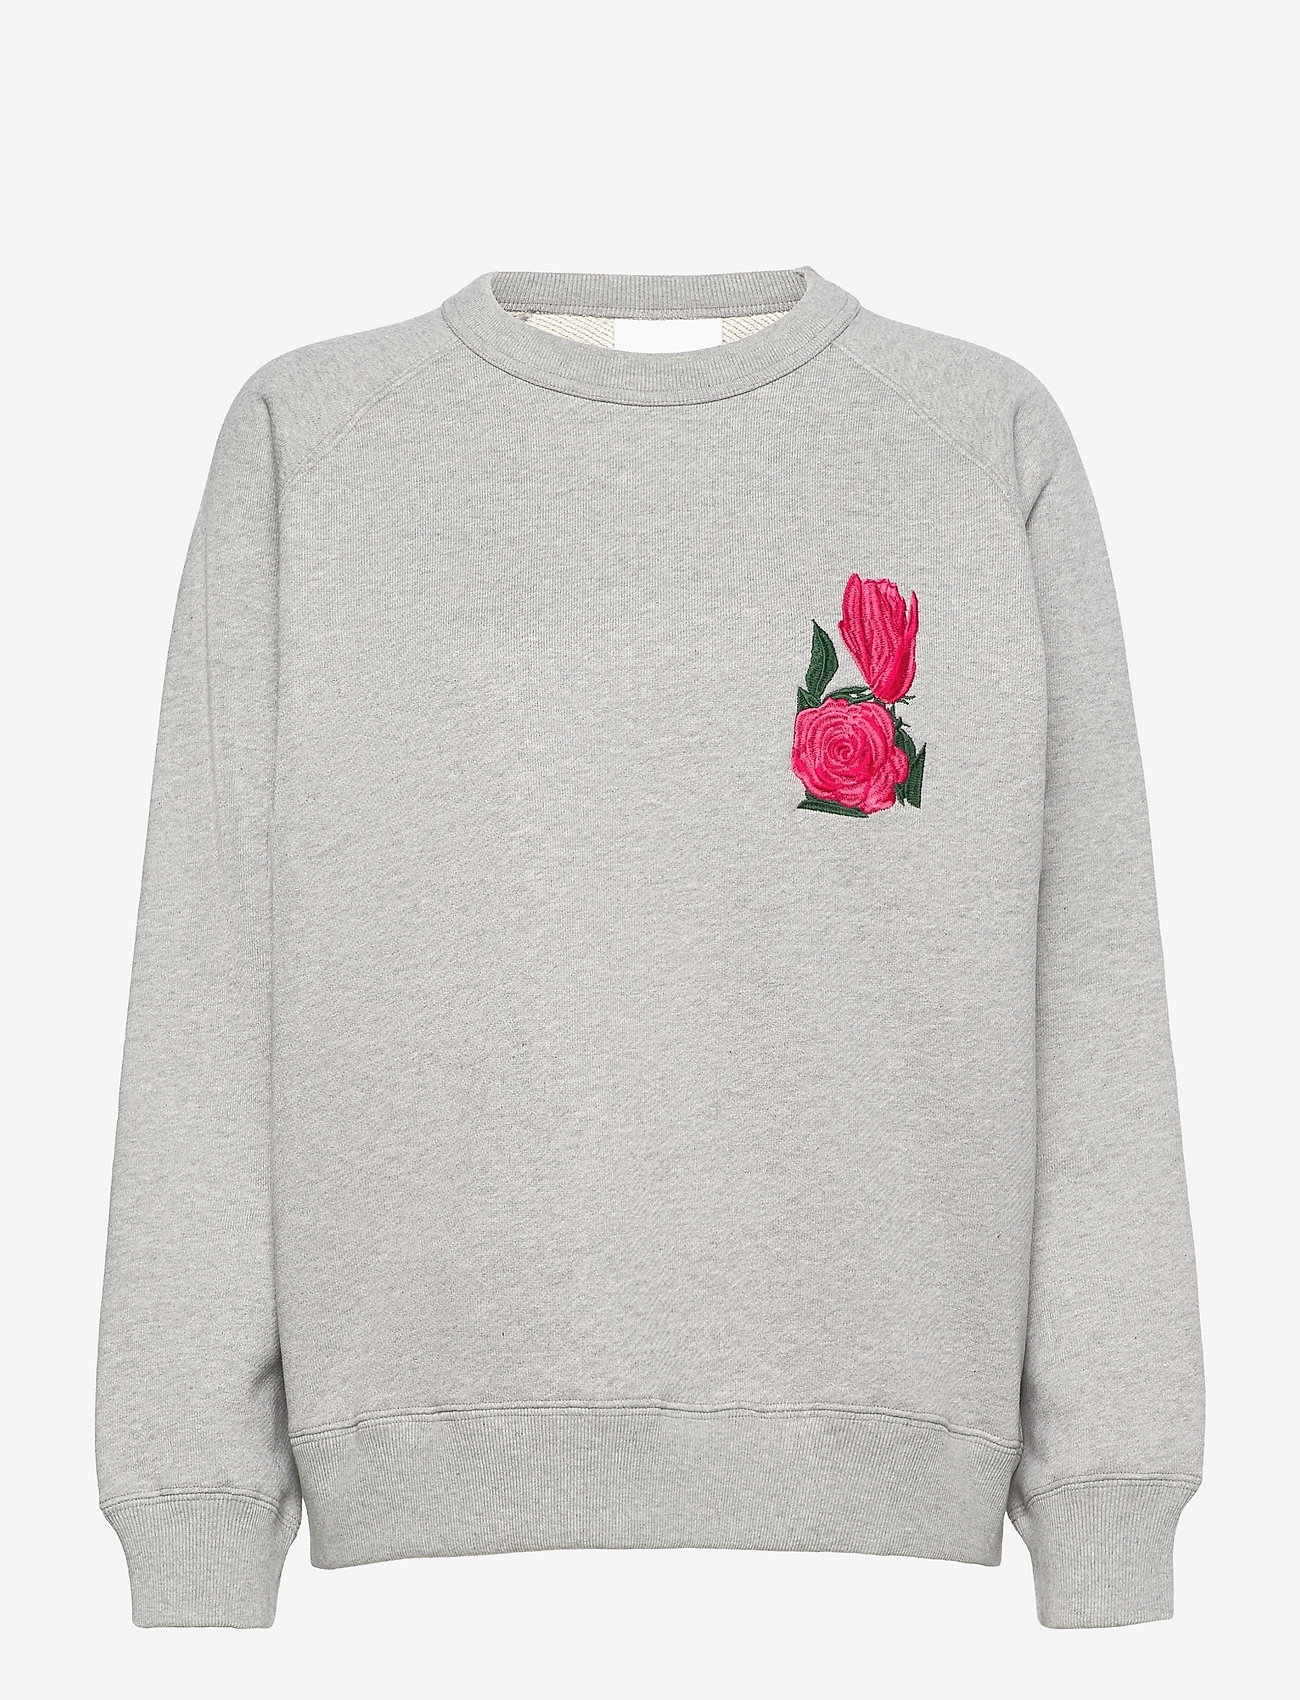 Soulland Amy Rose Sweatshirt - Sweatshirts | Boozt.com